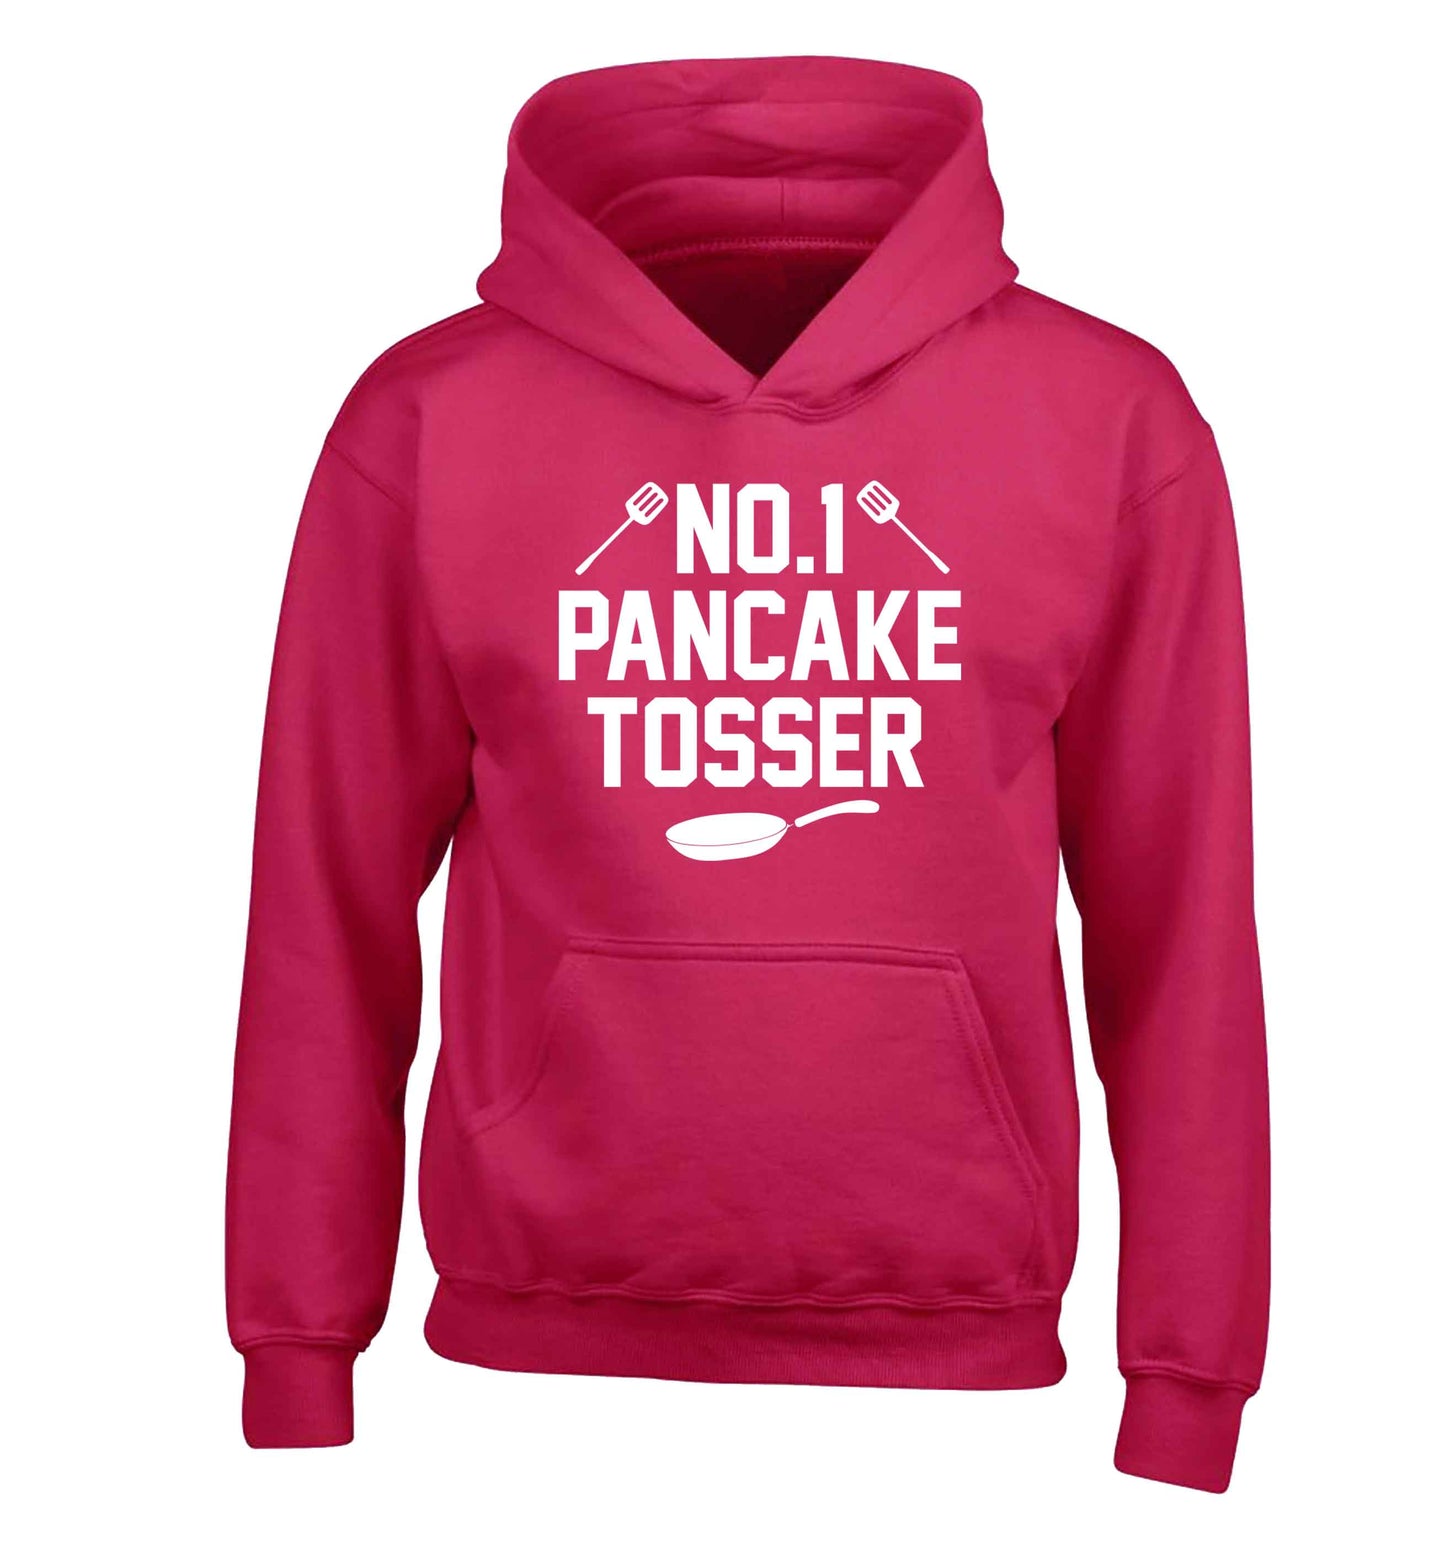 No.1 Pancake tosser children's pink hoodie 12-13 Years